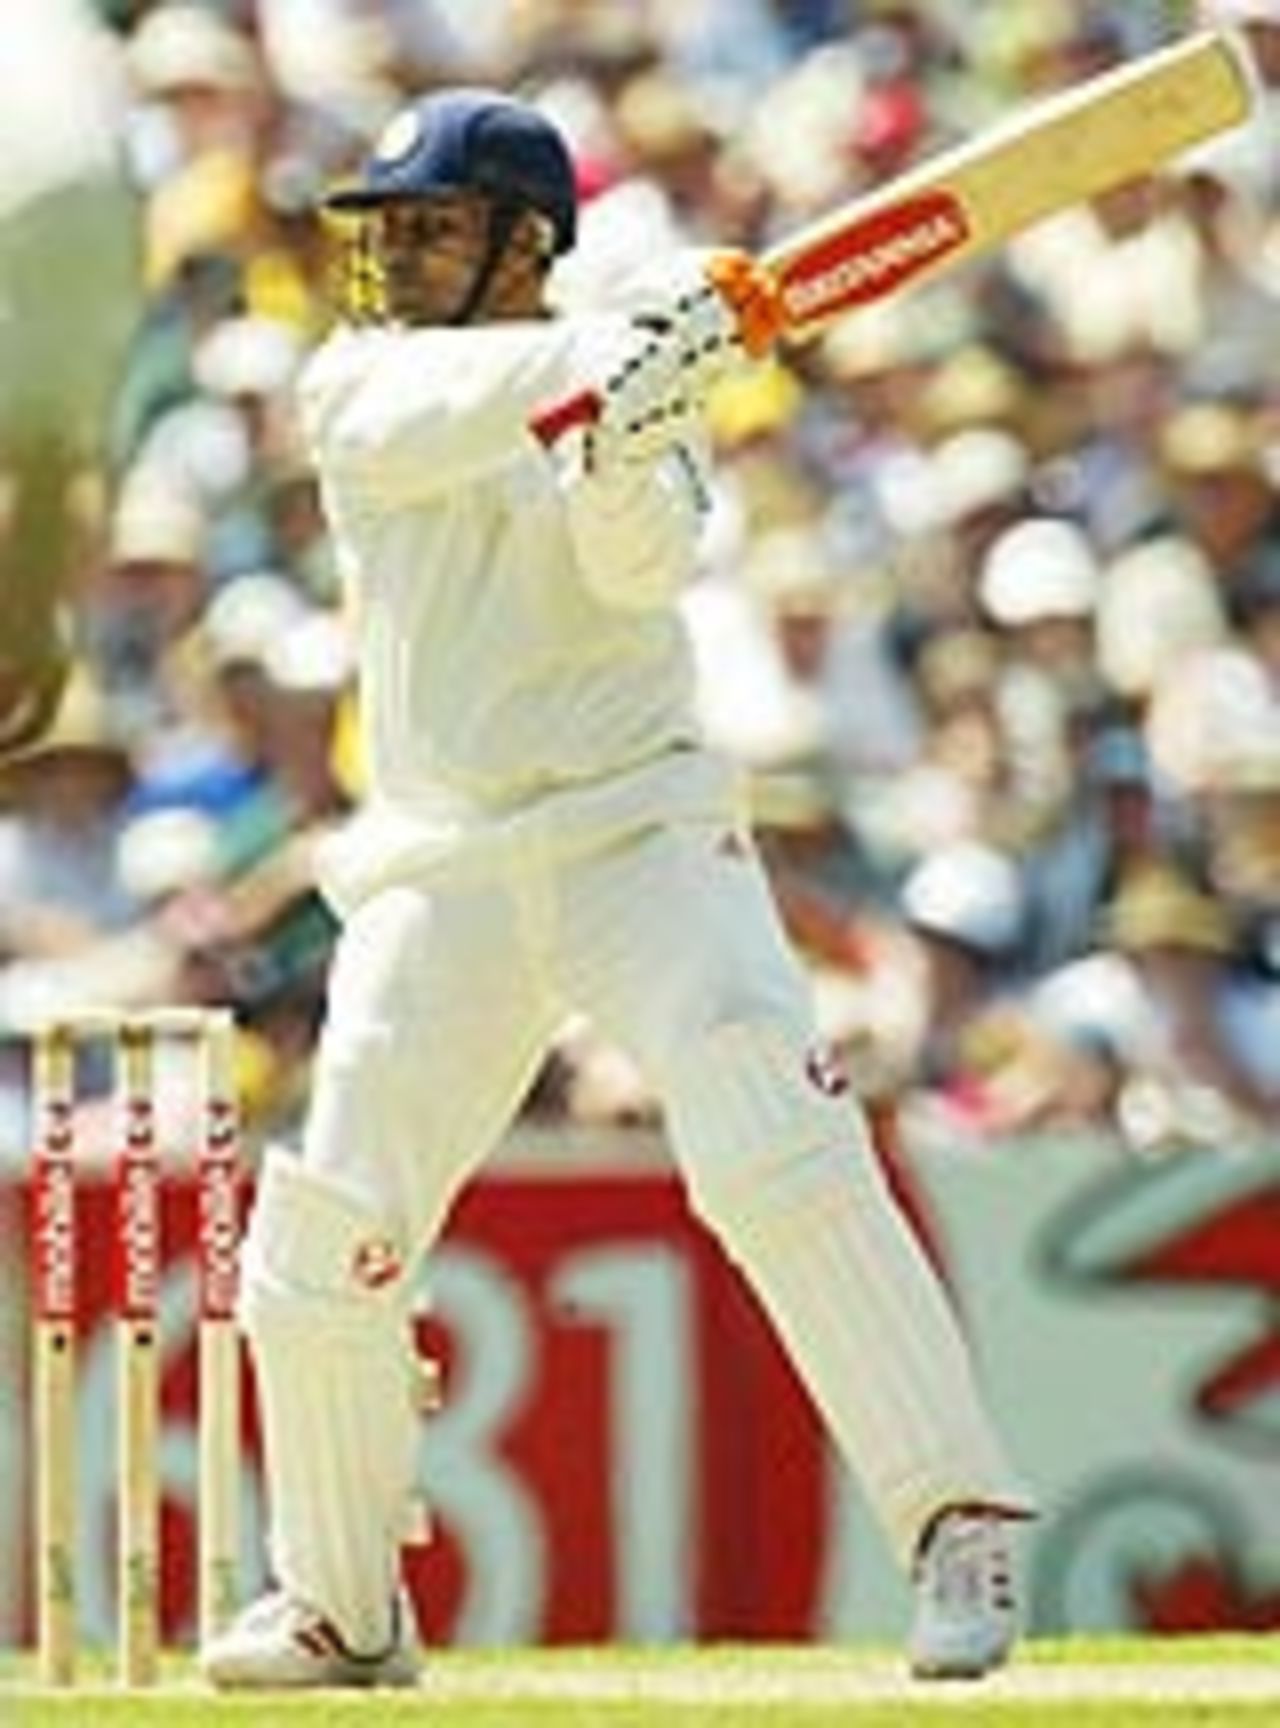 Virender Sehwag rocks back and cuts, Australia v India, 3rd Test, Melbourne, 1st day, December 26, 2003